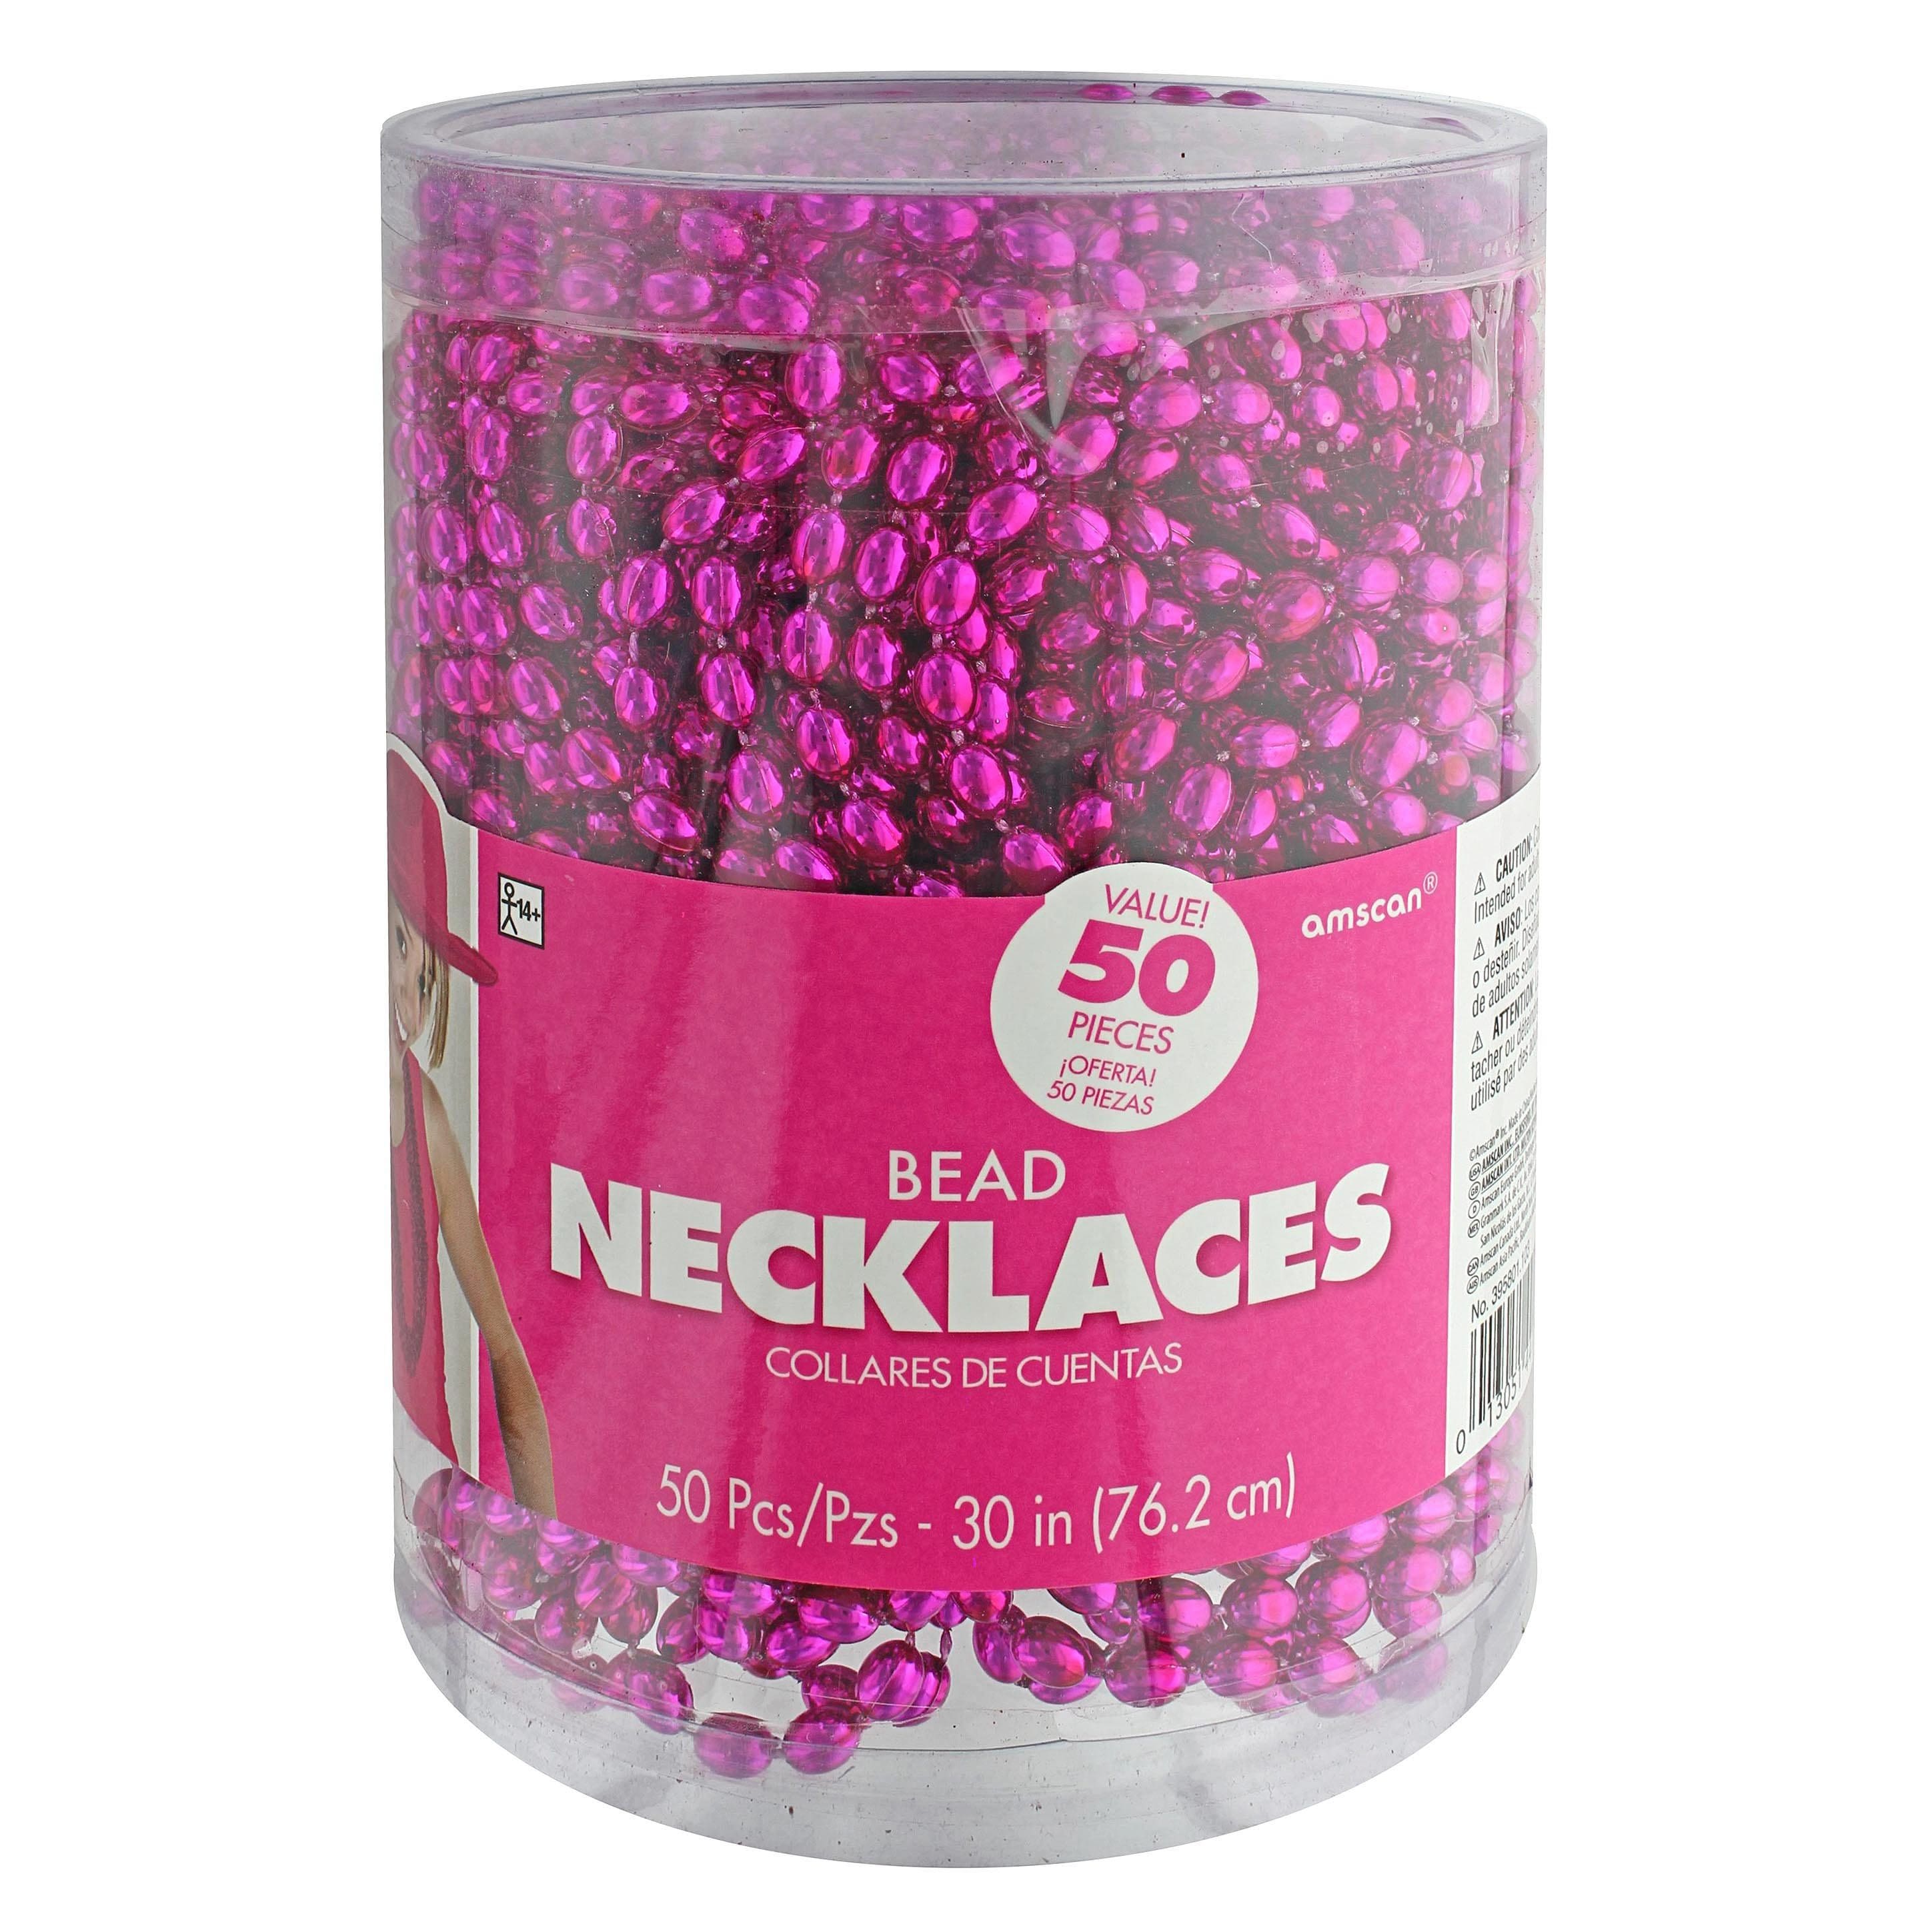 30" Metallic Bead Party Necklaces, 50ct.